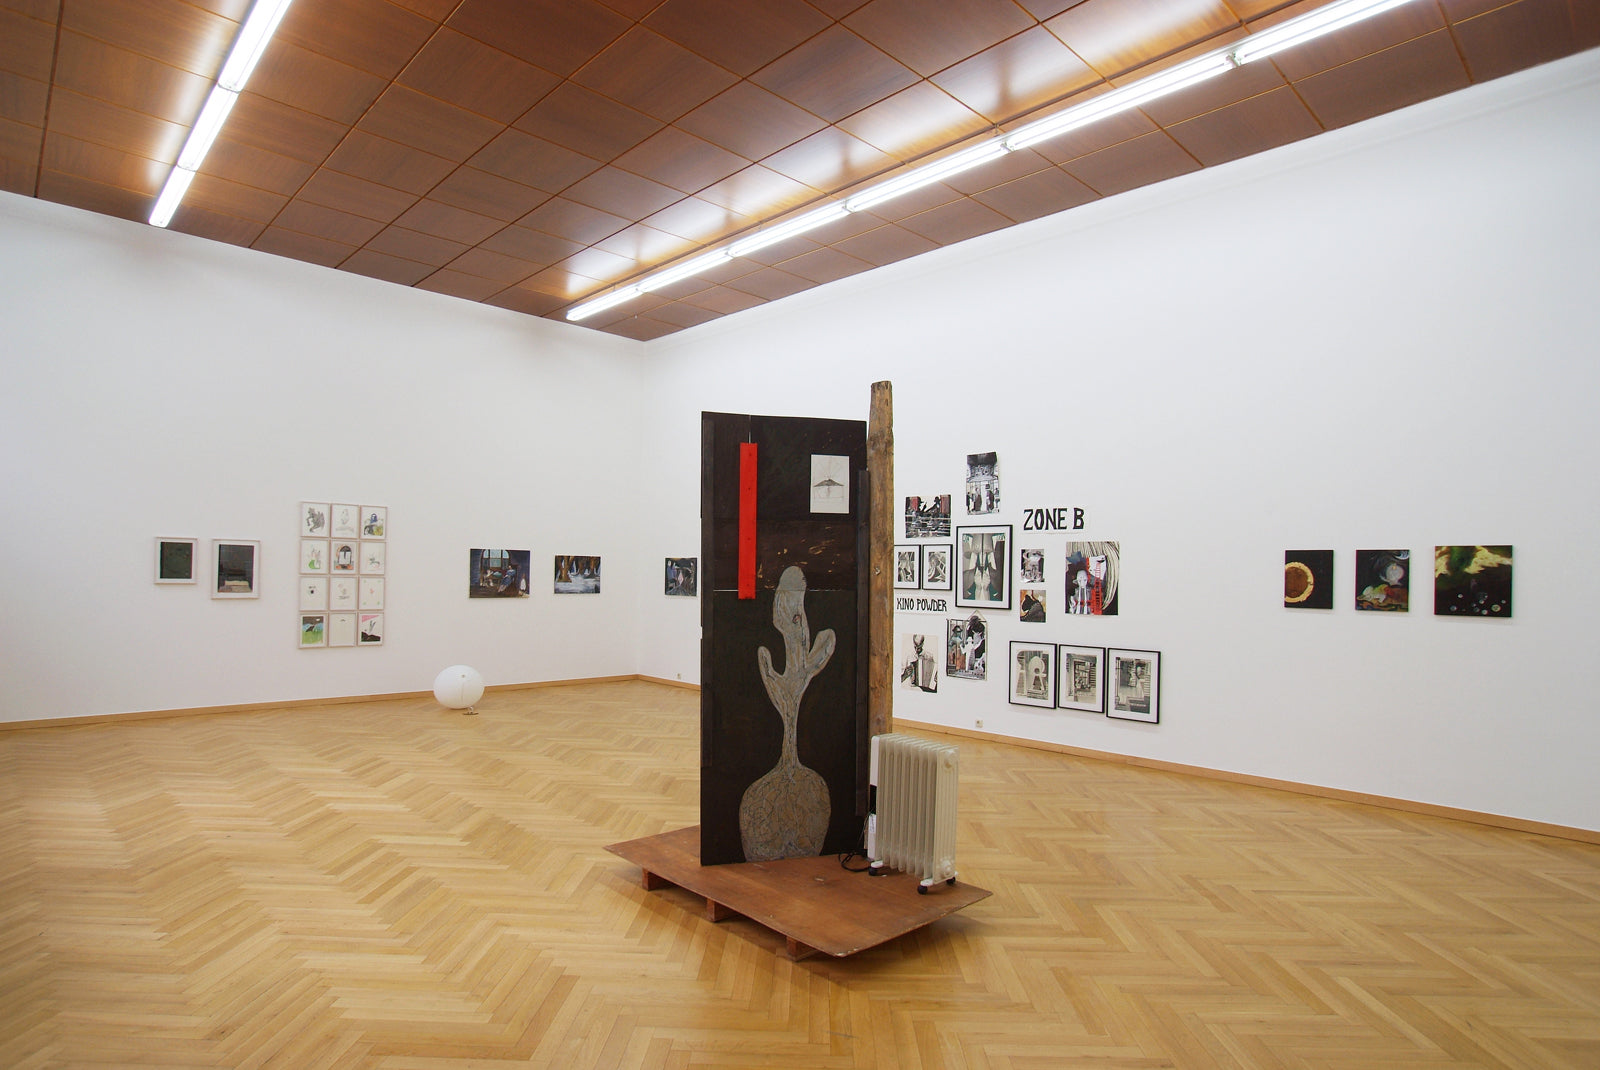 <p> </p> <p><span>... A Room with Heidenpeter, Dickreiter, Lotz, Maiwald, Mascher, Okon and Parkina, Installation view, 2006, Galerie Michael Janssen, Cologne</span></p>